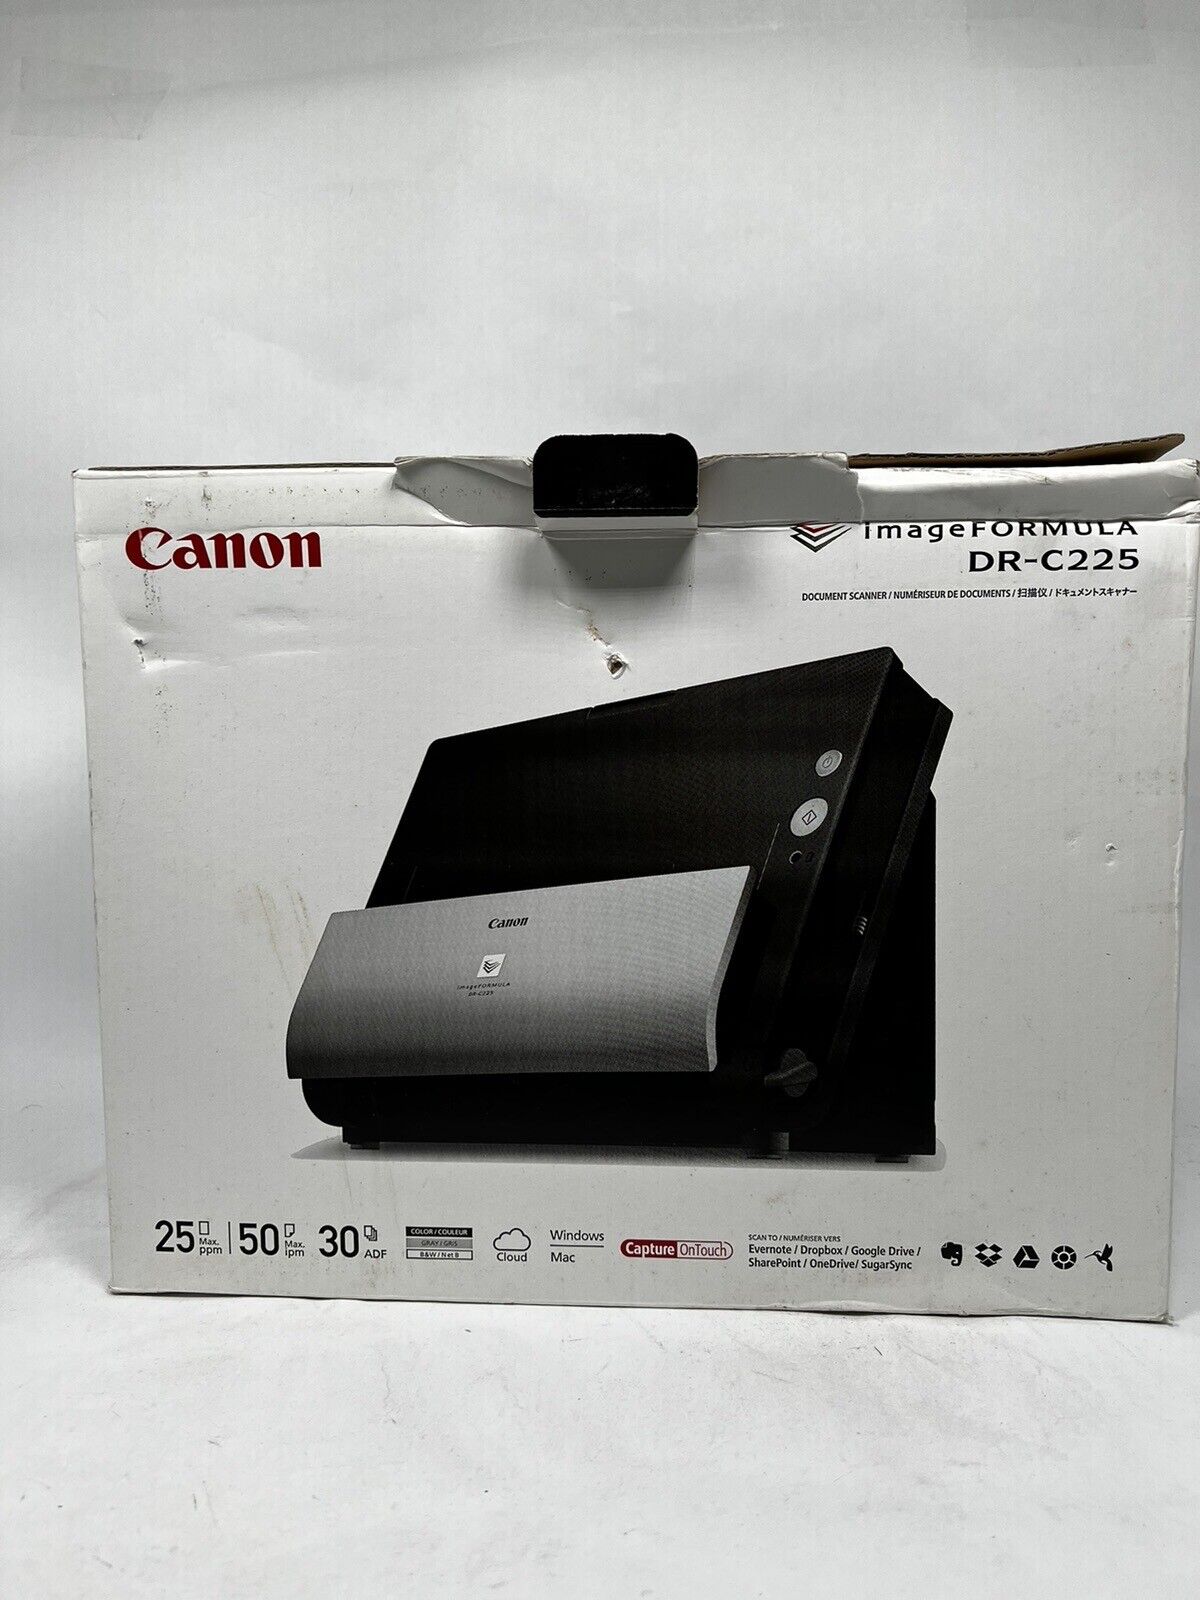 Canon imageFORMULA DR-C125 Document Scanner